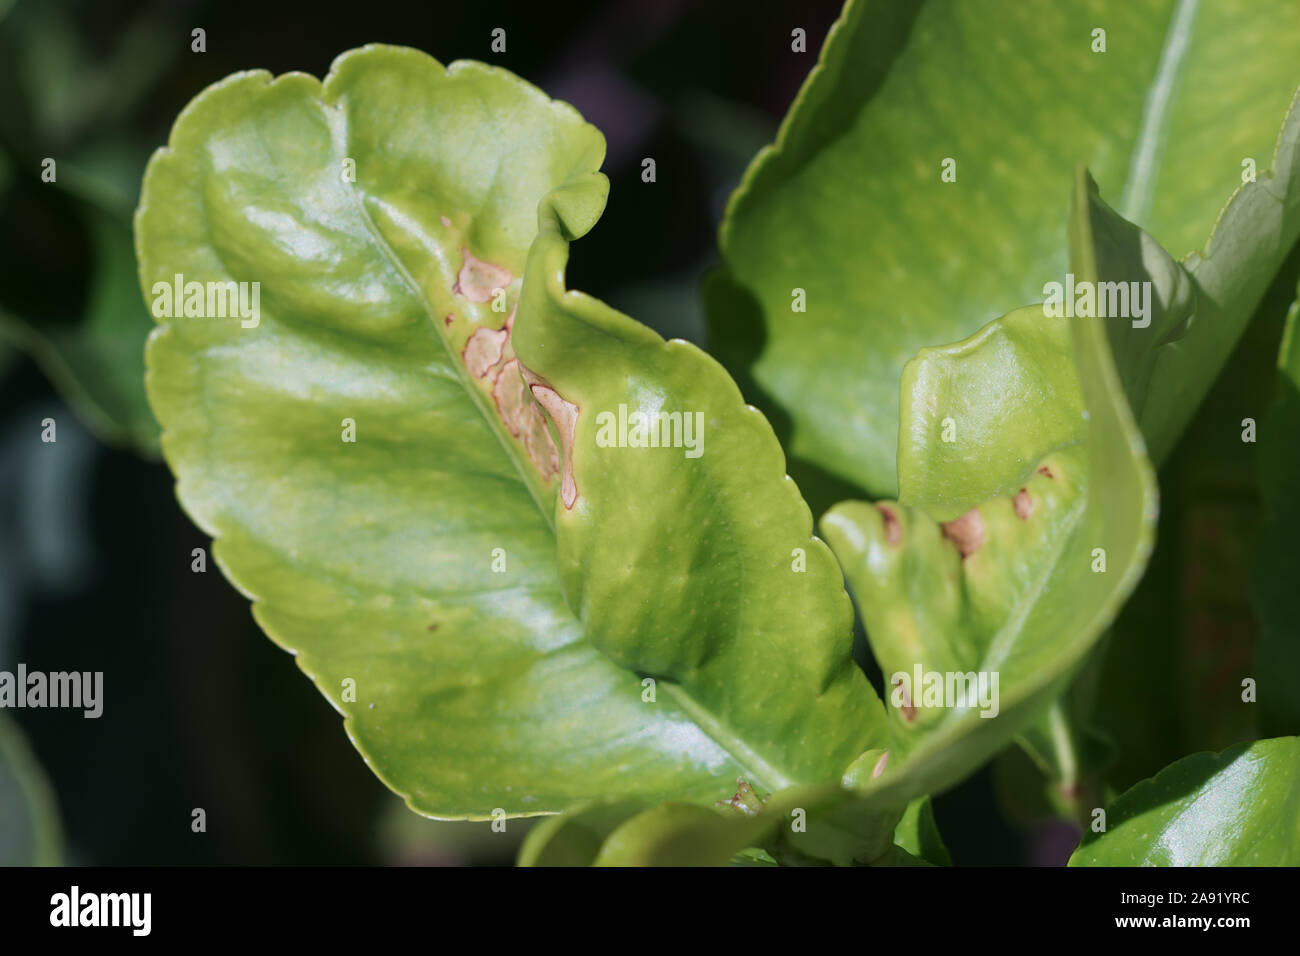 Leafs of lemon tree mined by a Citrus leaf miner (Phyllocnistis citrella) larva - Phyllocnistis citrella Stock Photo